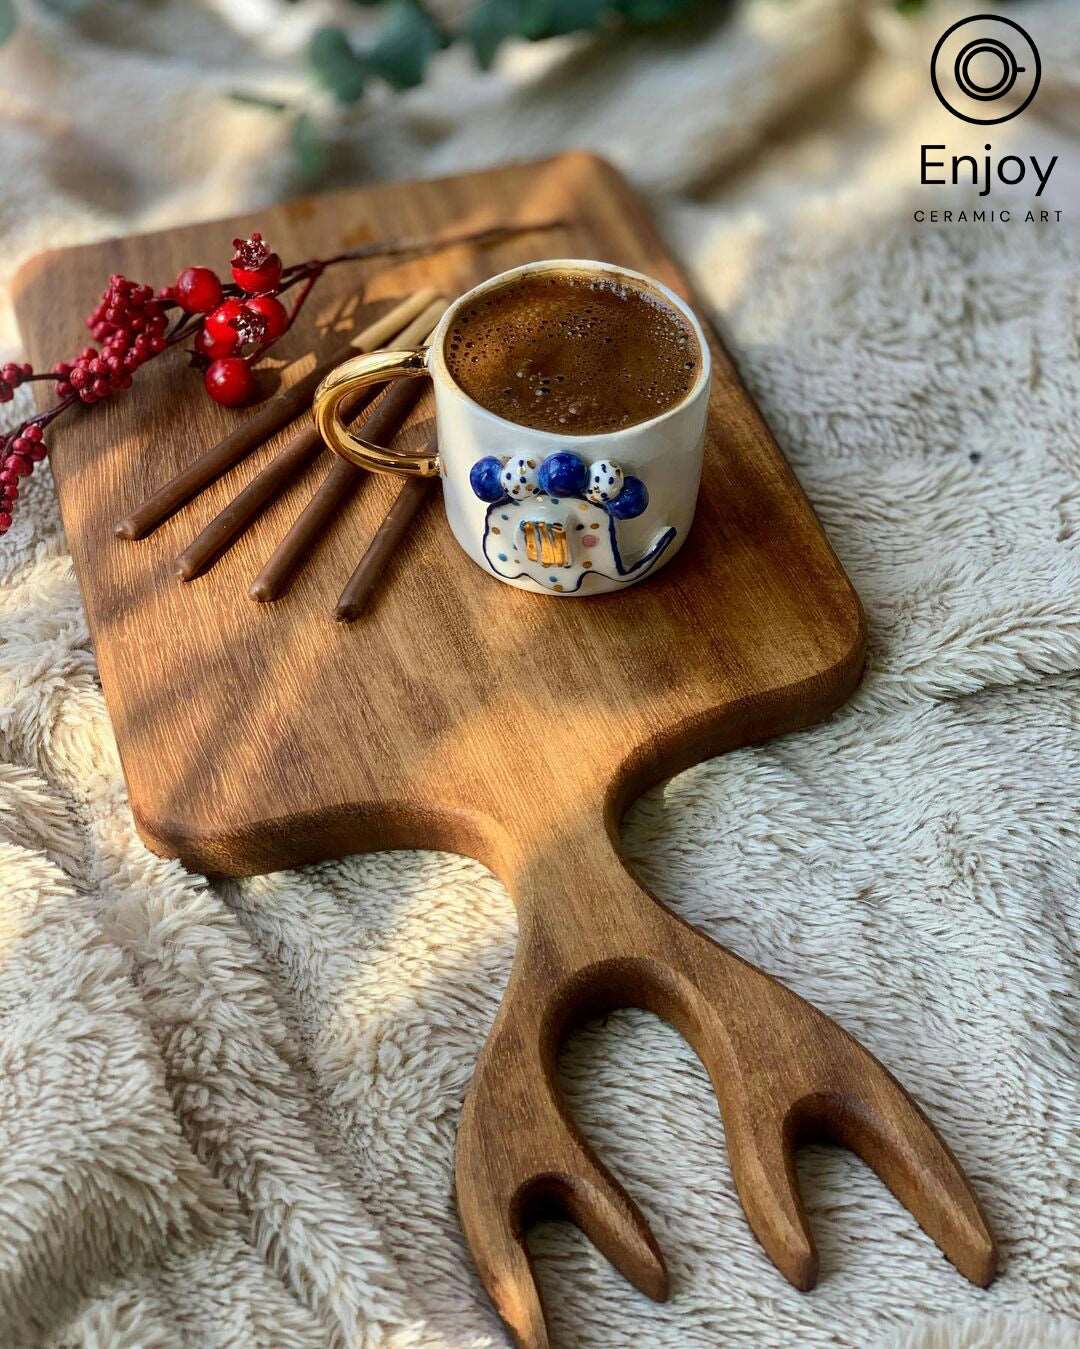 Elephant Abundance: Handmade Ceramic Espresso Cup Set with Gold Handle & Saucer, 5.4 oz - Perfect Elephant Lover Gift, Starbucks Inspired Elephant Coffee Cup